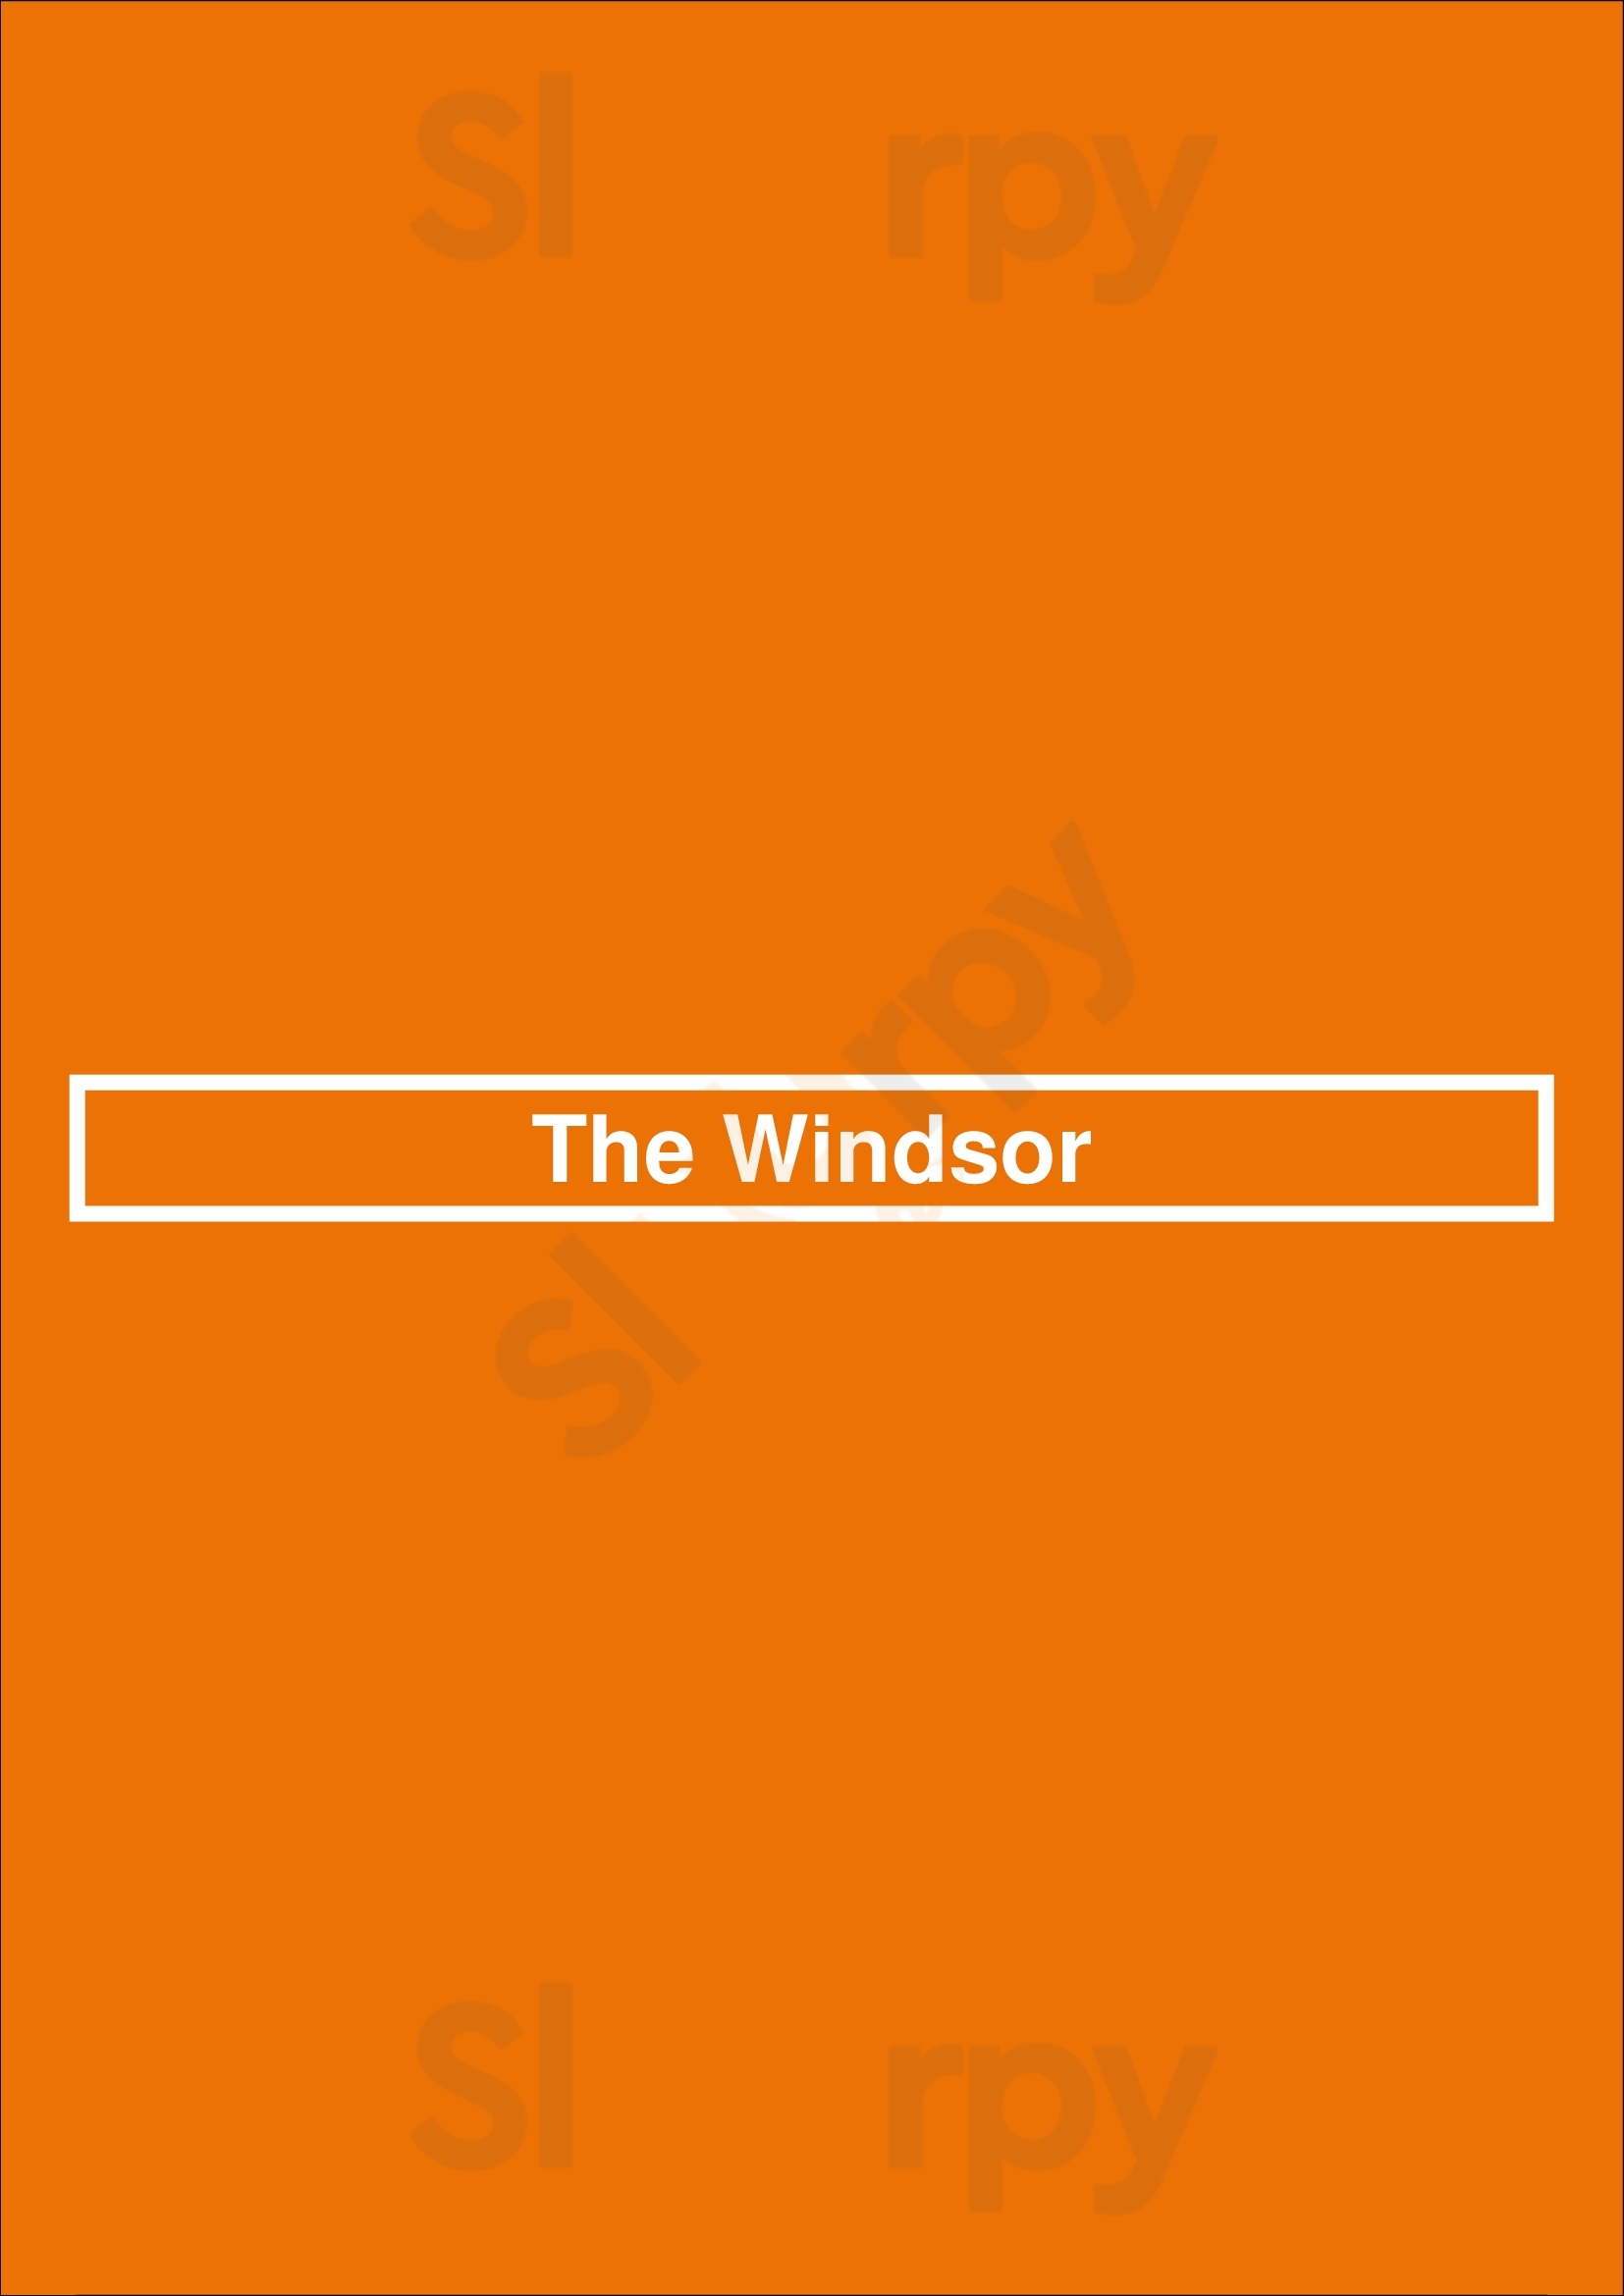 The Windsor Chicago Menu - 1